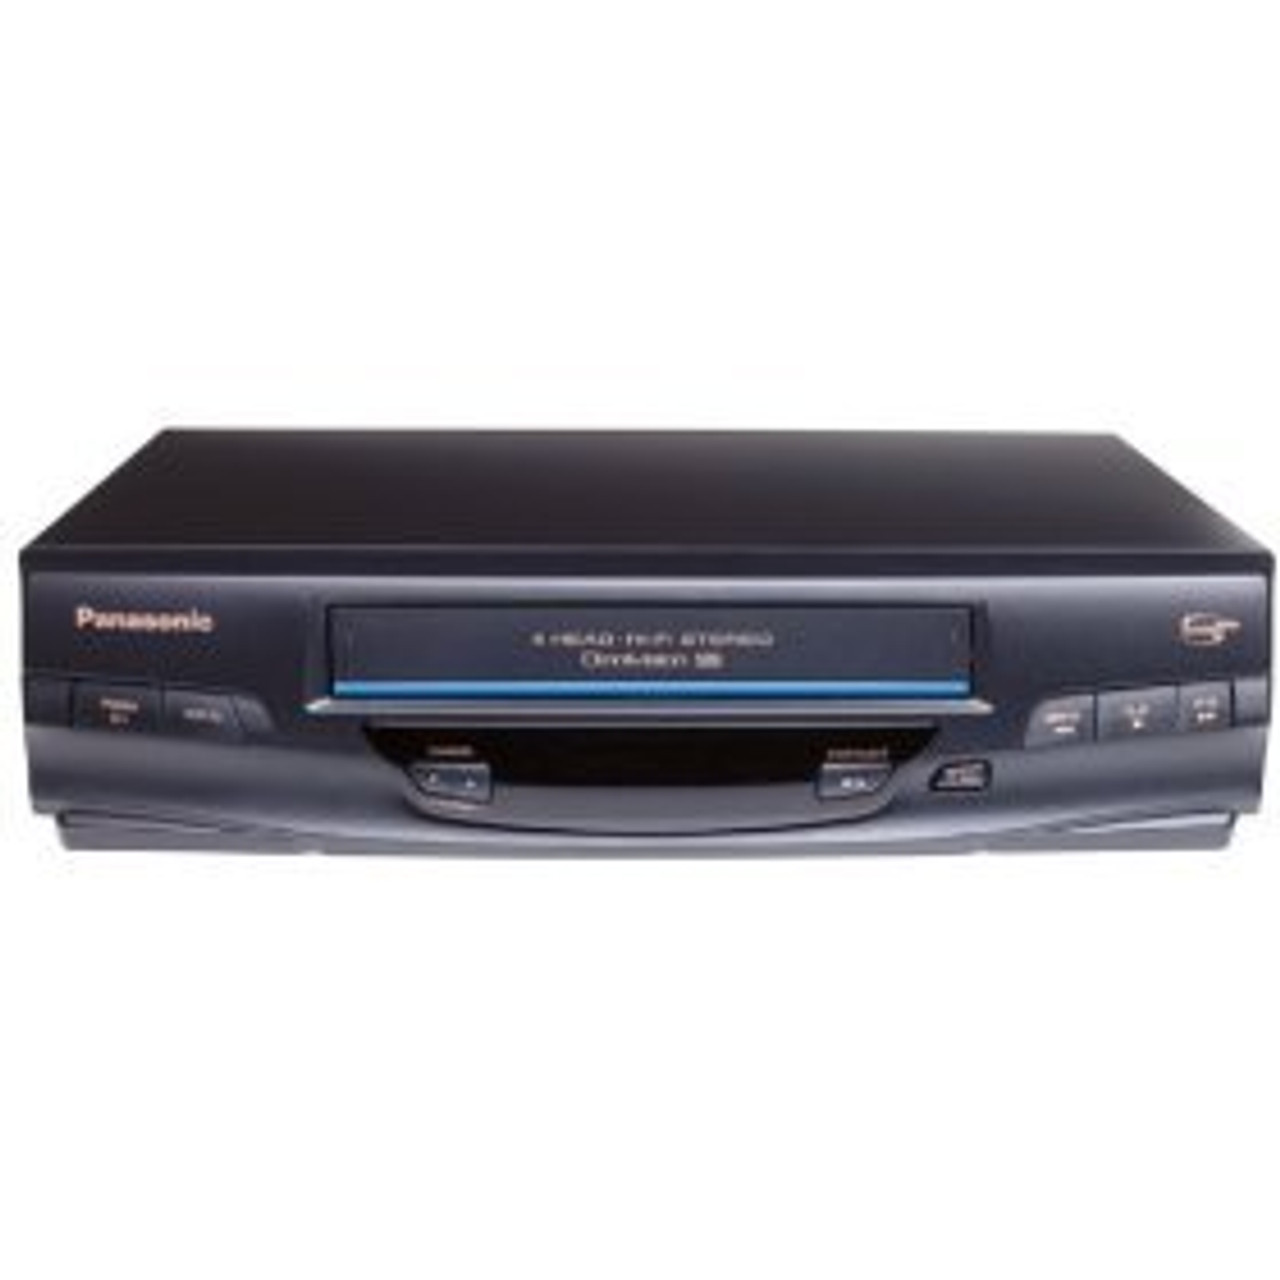 Panasonic PV-V4020 VCR with tuner